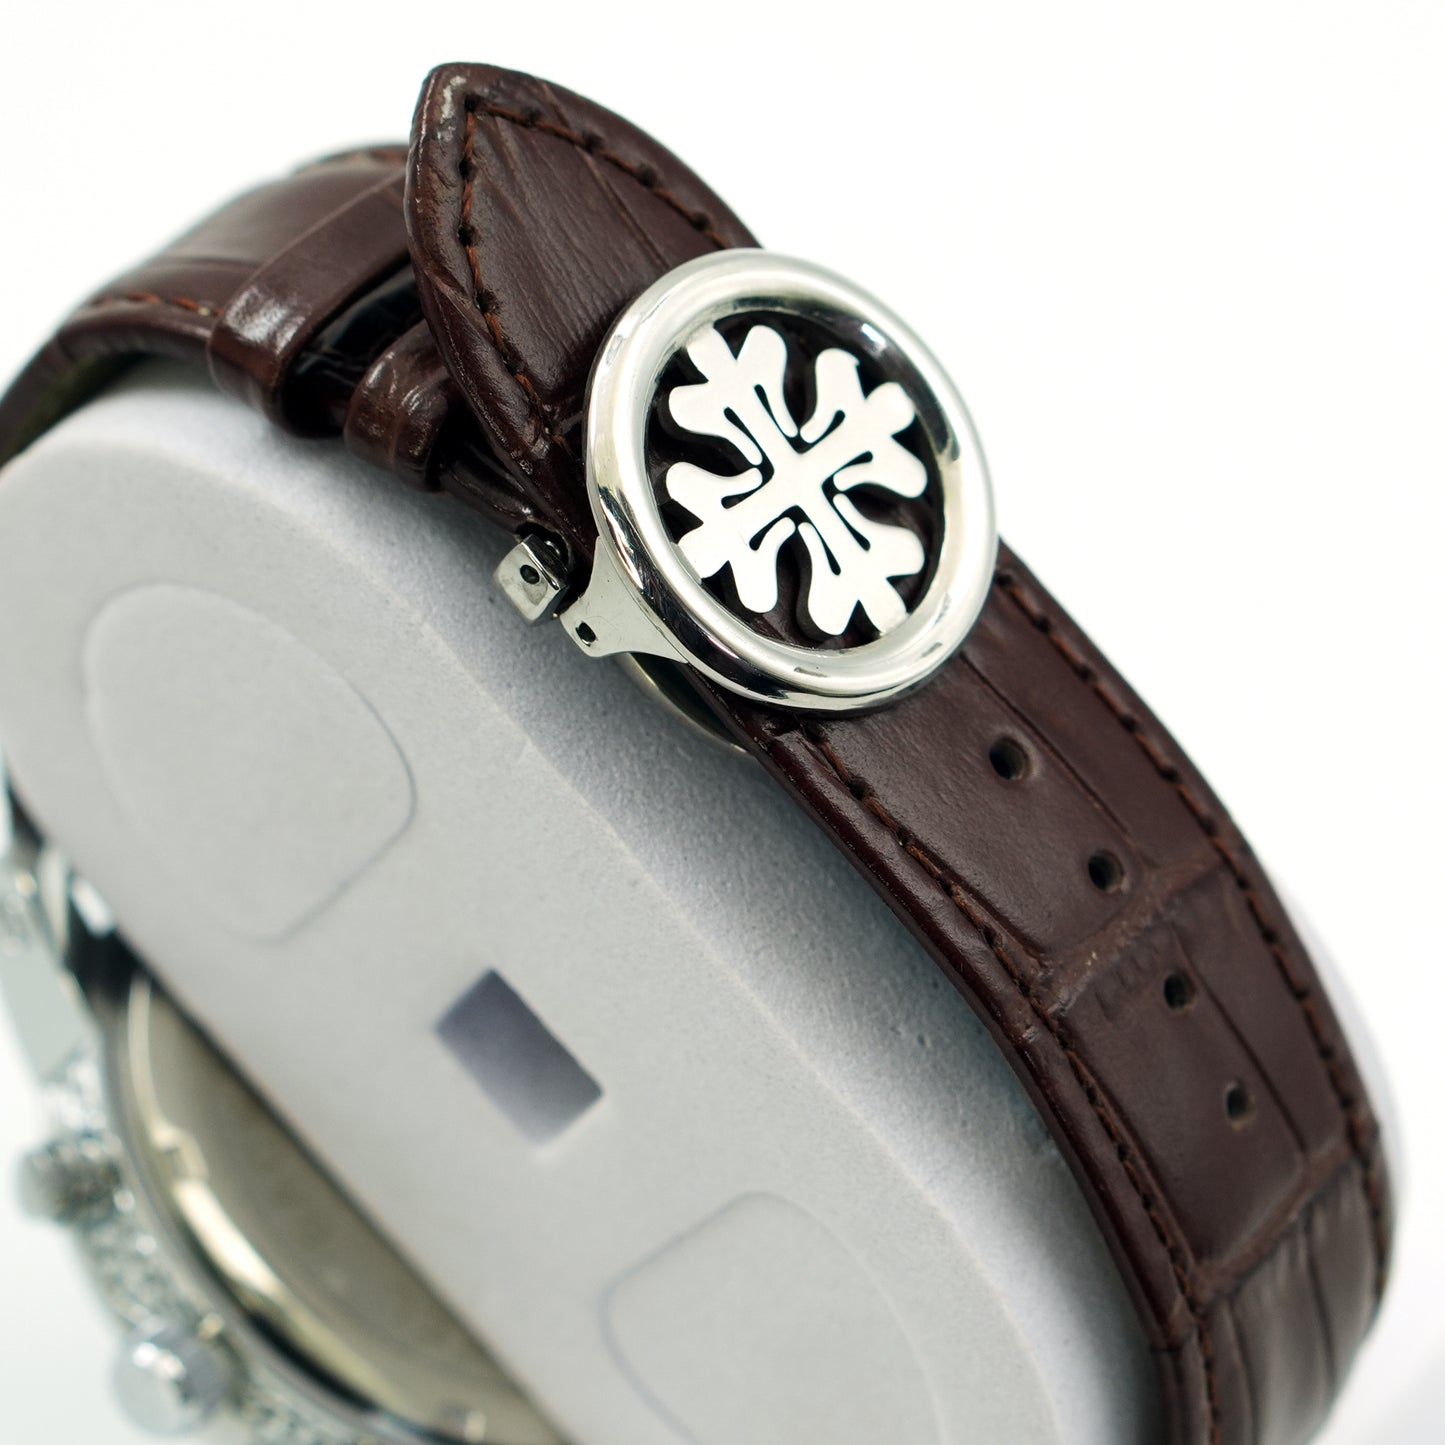 Premium Quality Patek Philippe Chronograph Quartz Watch | PP Watch CN 231 C